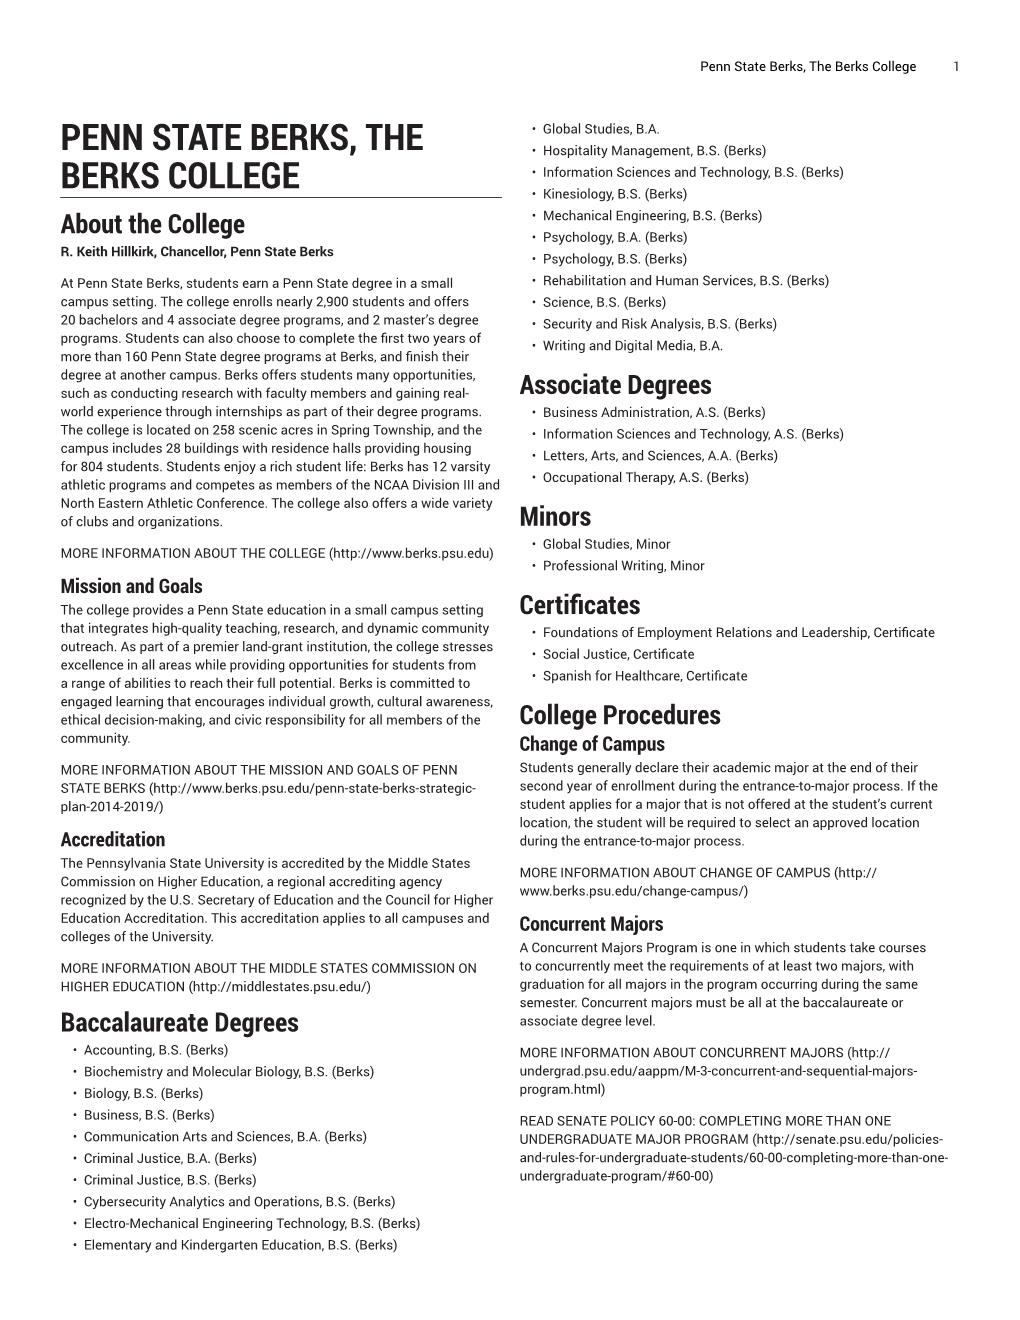 Penn State Berks, the Berks College 1